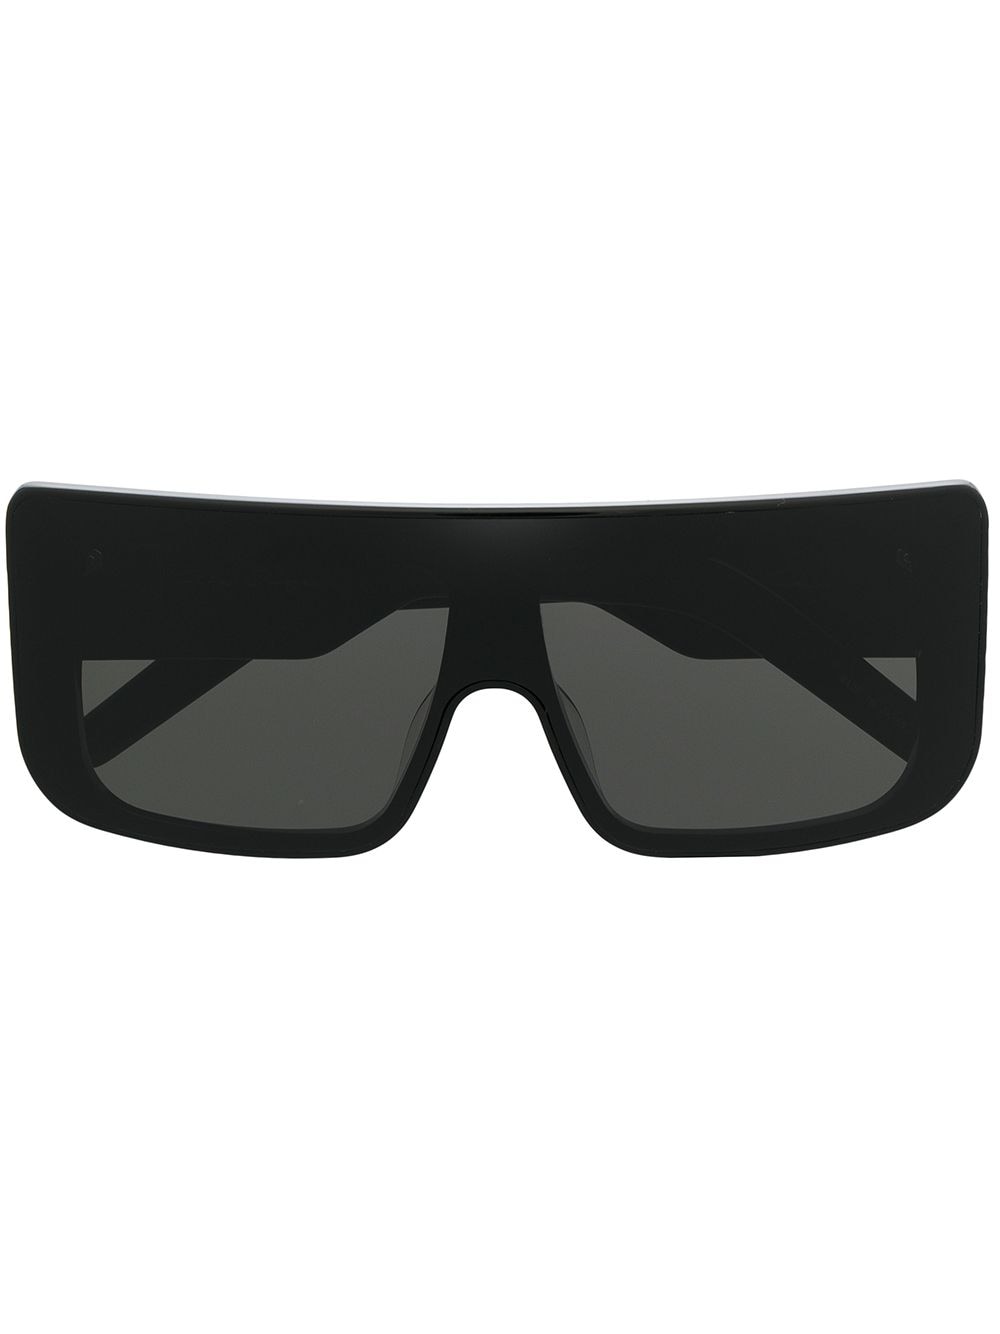 Rick Owens Sunglasses Black